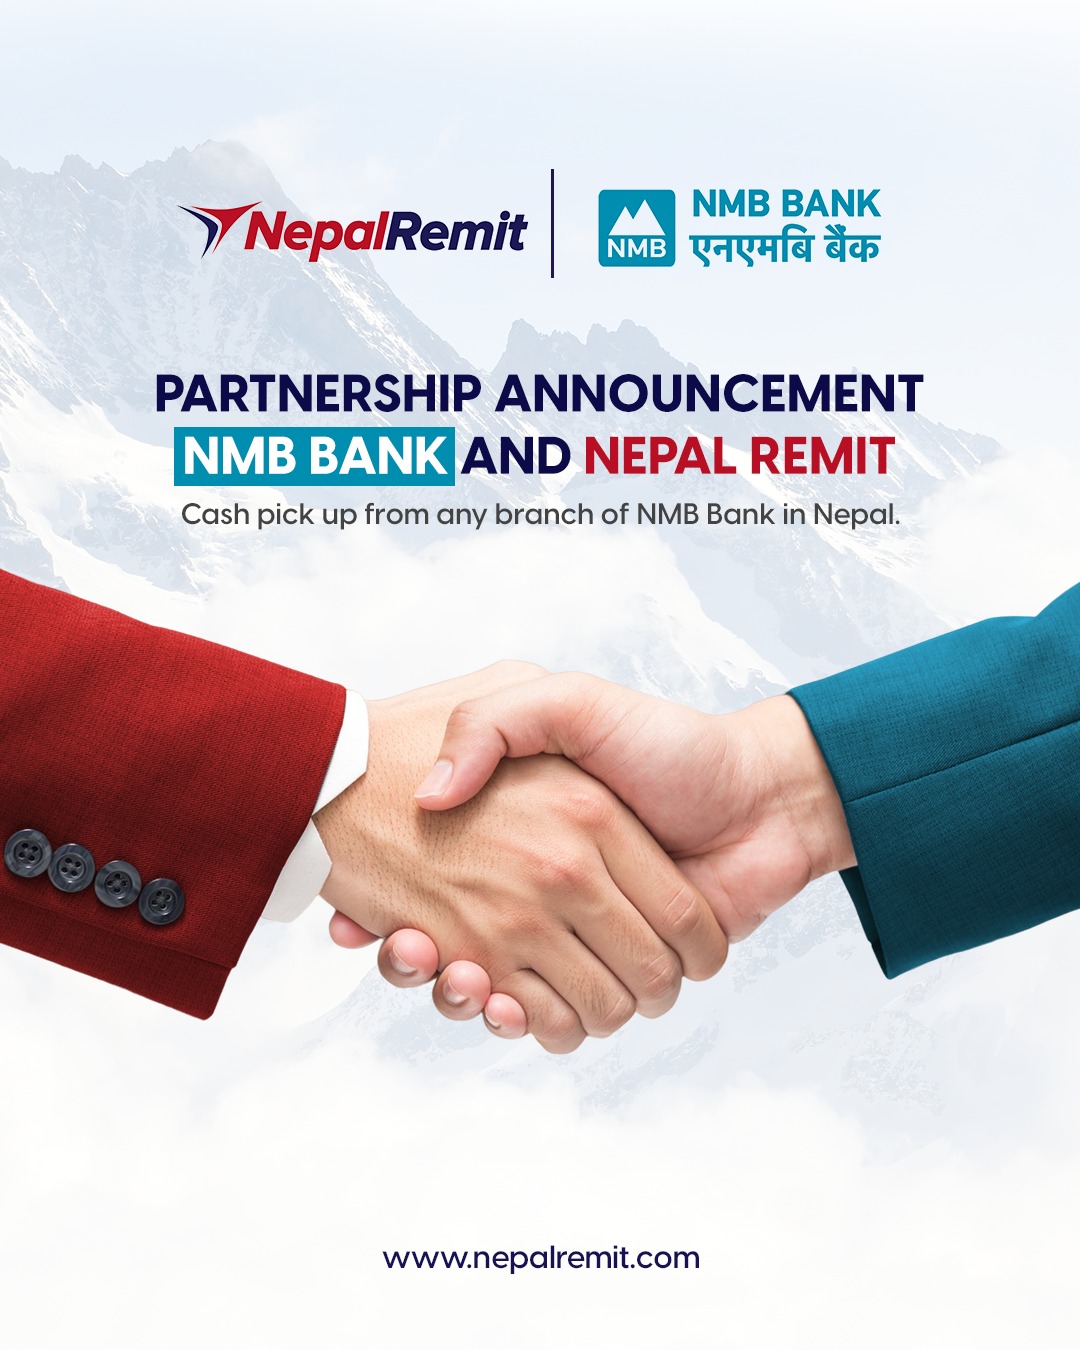 एनएमबी बैंक र नेपाल रेमिटबीच रेमिट्यान्स् सम्झौता, नेपालमा अब रेमिट्यान्स रकम पाउन सहज